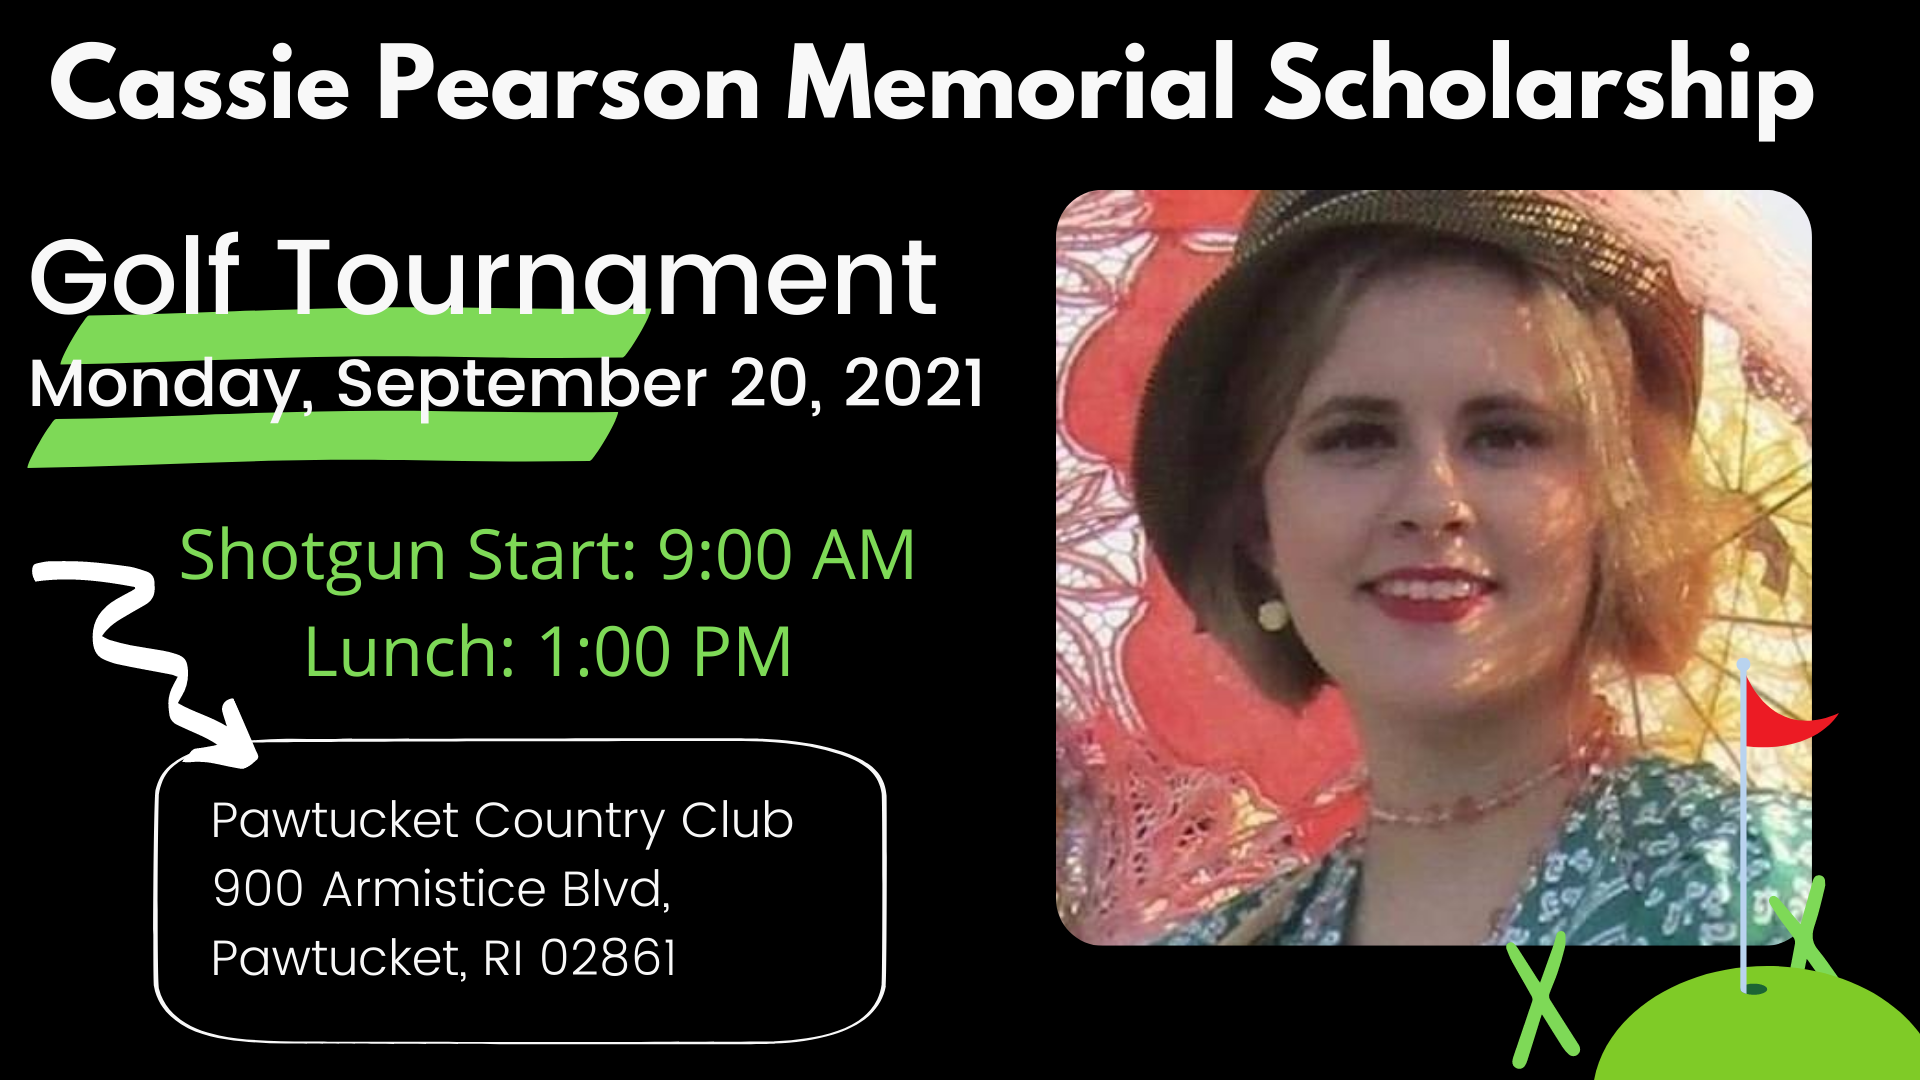 Cassie Pearson Memorial Scholarship Golf Tournament 2021